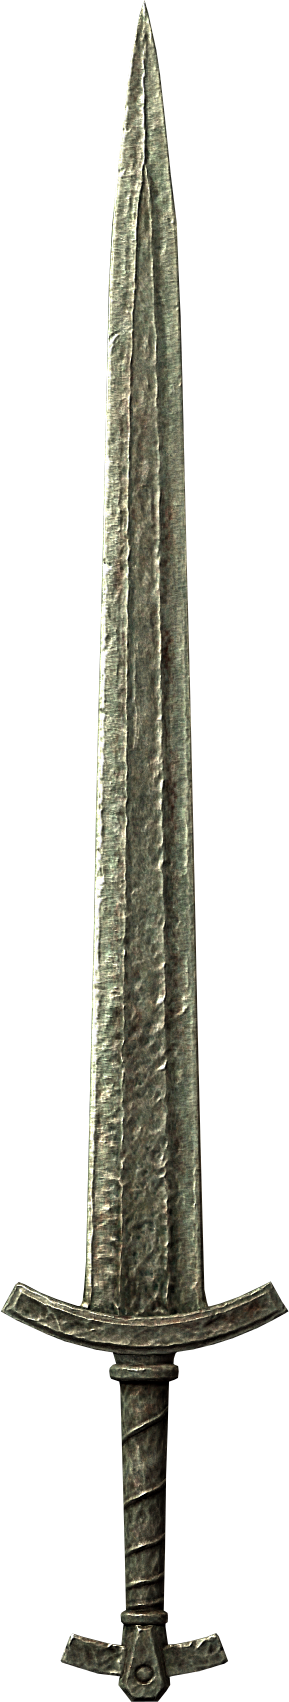 skyrim broken iron sword